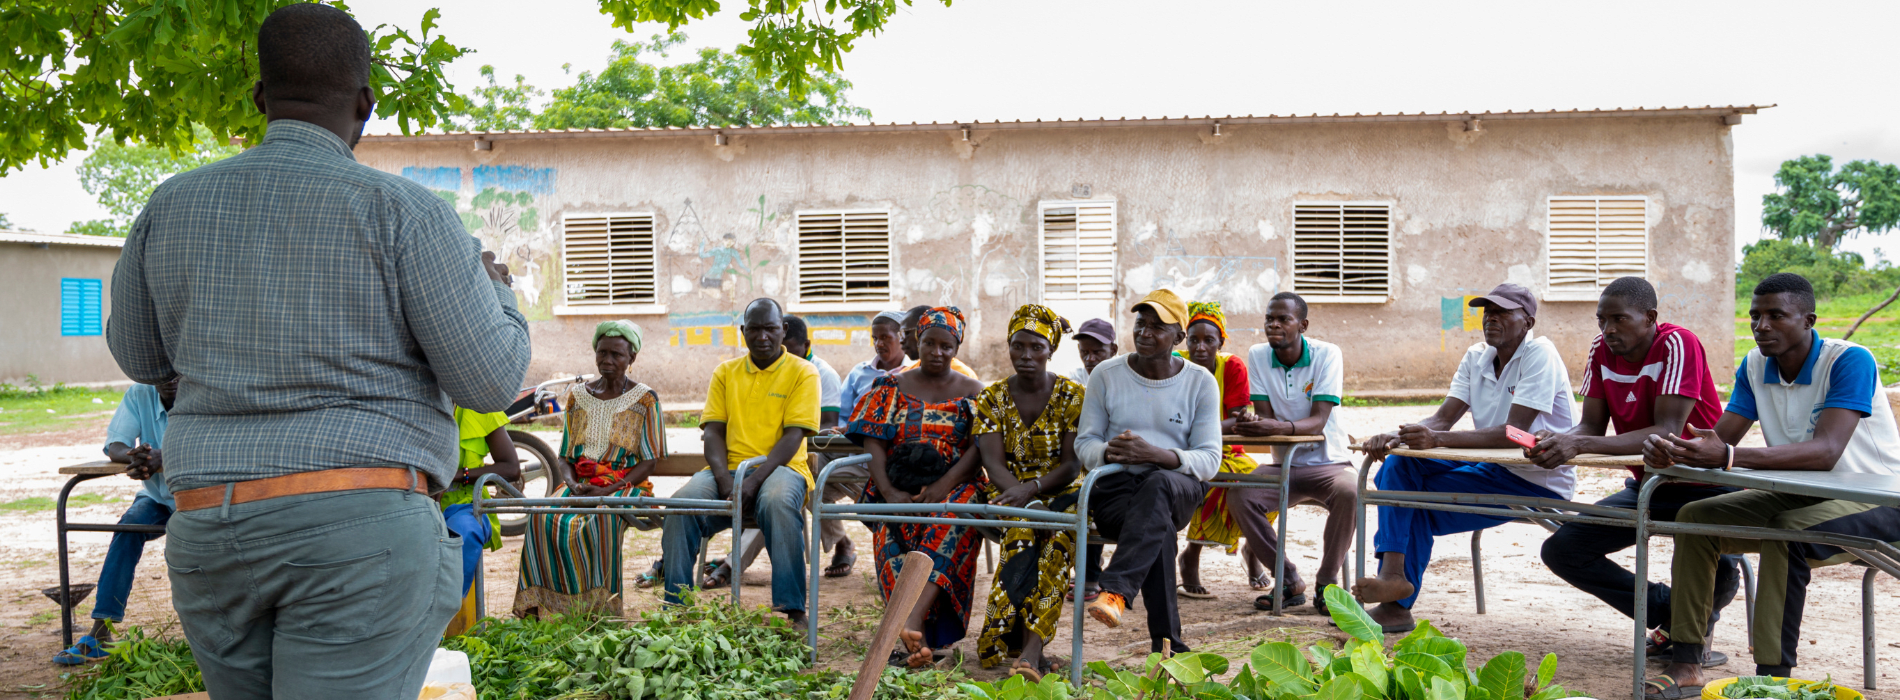 Volunteer session in Senegal